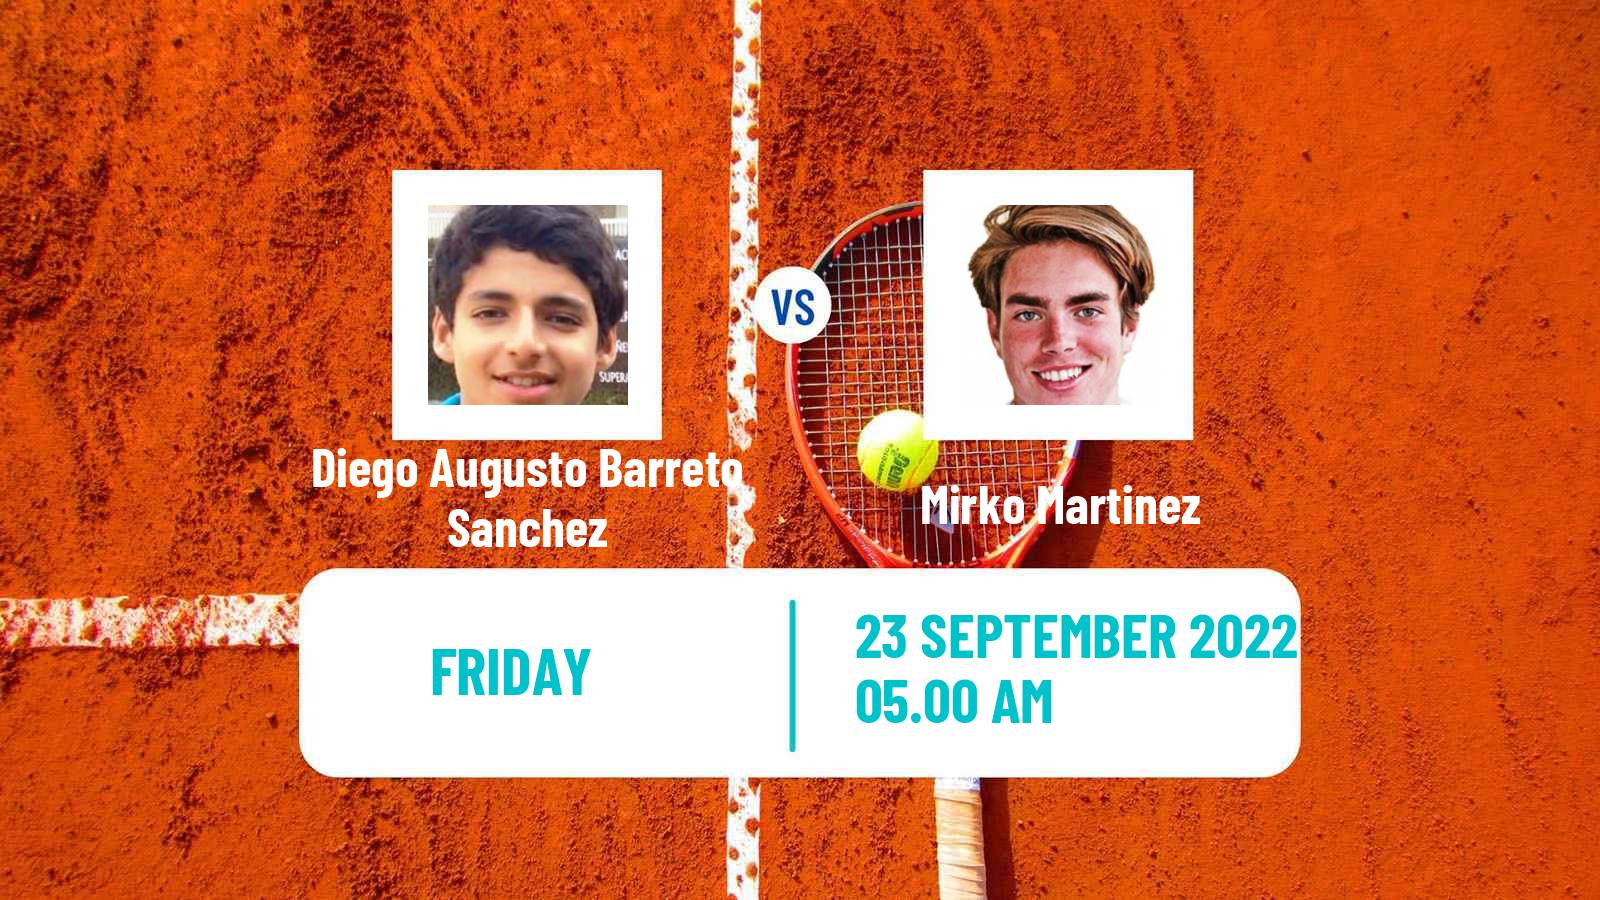 Tennis ITF Tournaments Diego Augusto Barreto Sanchez - Mirko Martinez